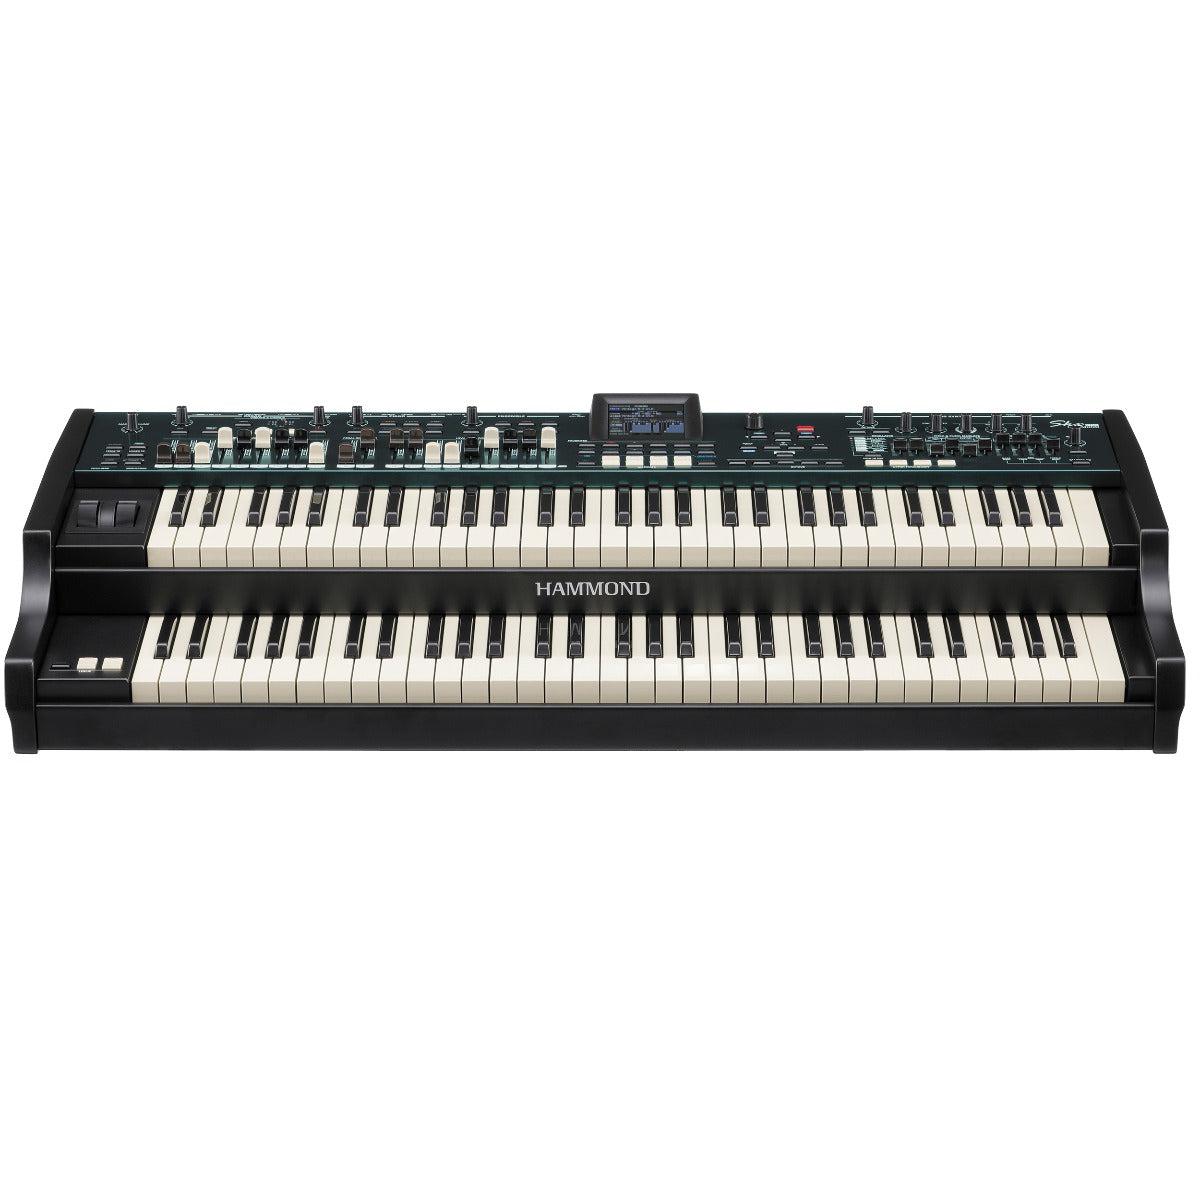 Hammond Skx Pro Dual Manual Stage Keyboard - View 1